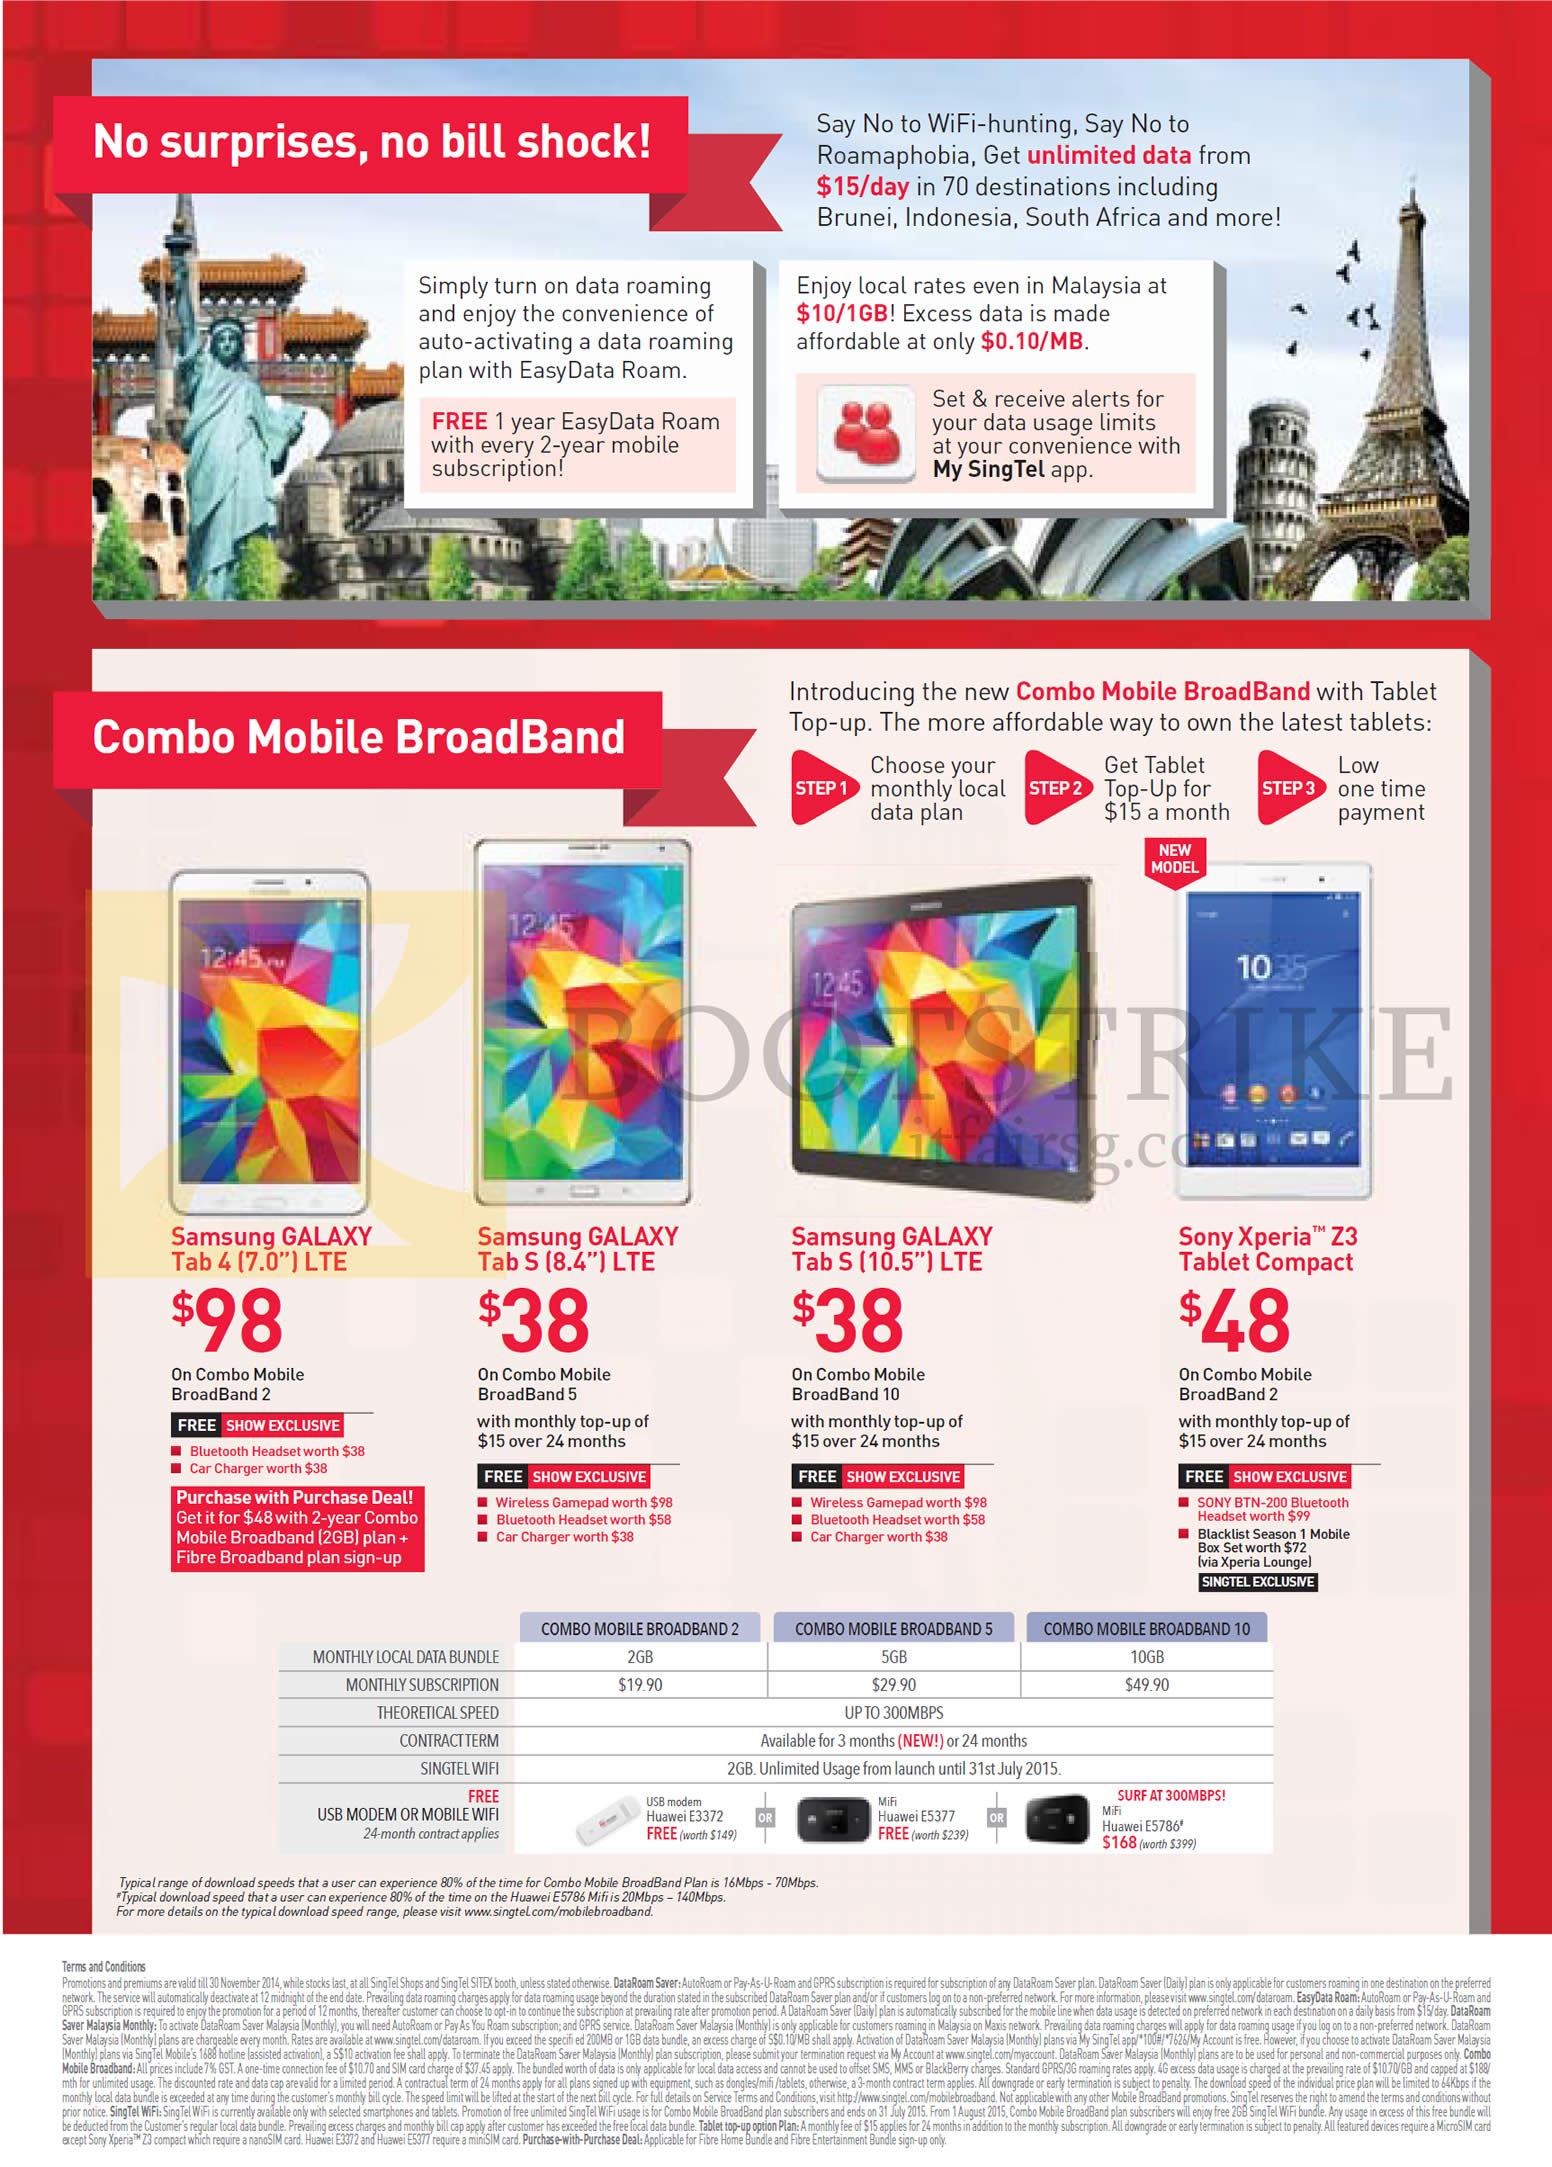 SITEX 2014 price list image brochure of Singtel Mobile Broadband Combo Samsung Galaxy Tab 4 7.0, Samsung Galaxy Tab S 8.4, Samsung Galaxy Tab S 10.5, Sony Xperia Z3 Compact